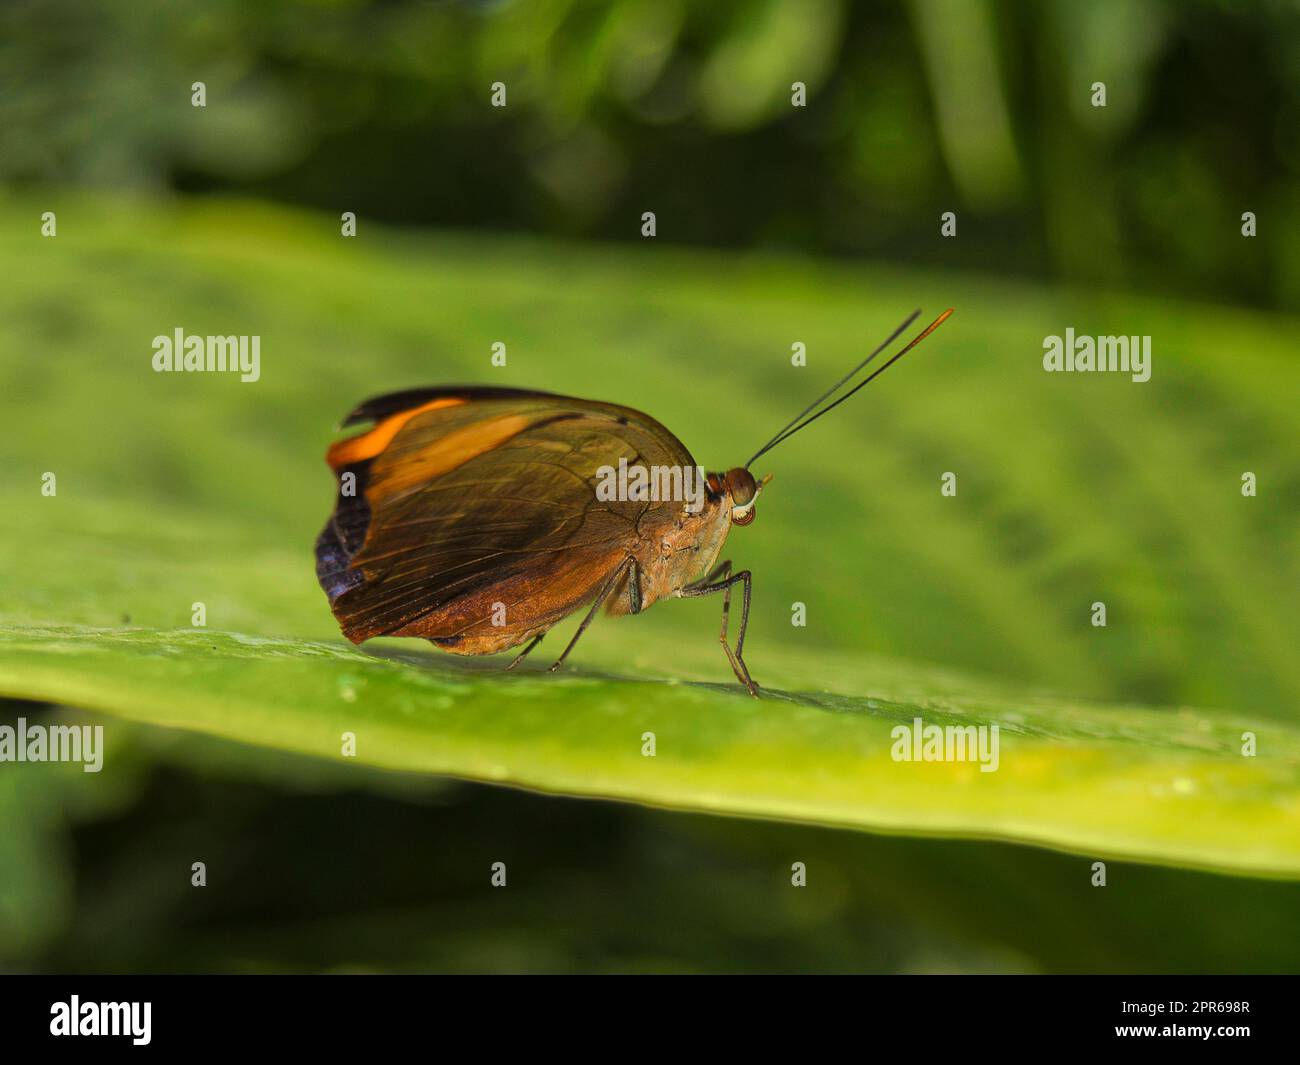 Germania, Hamm, Maximilianpark - Little Postman Butterfly Foto Stock